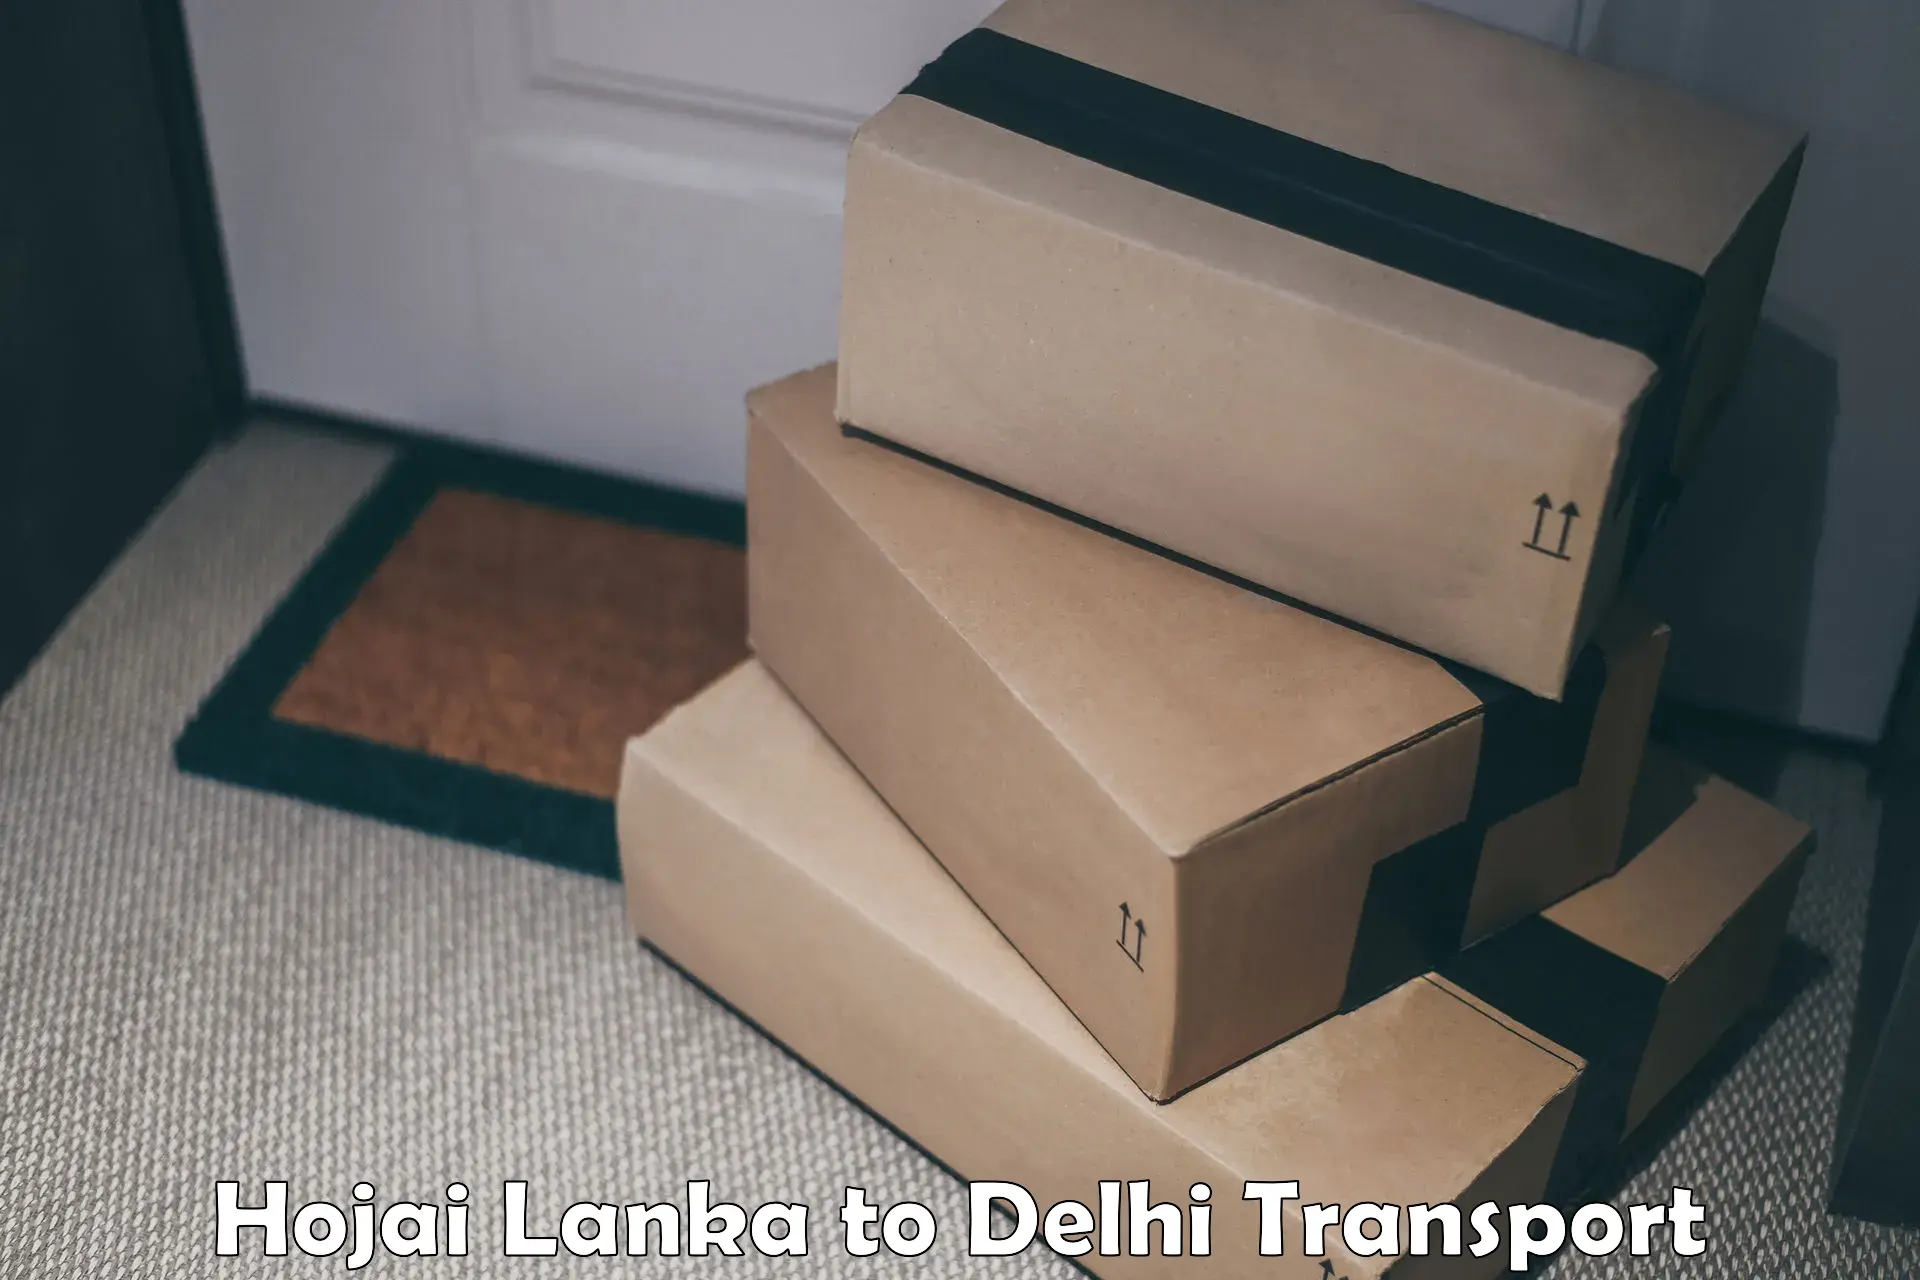 Furniture transport service Hojai Lanka to Delhi